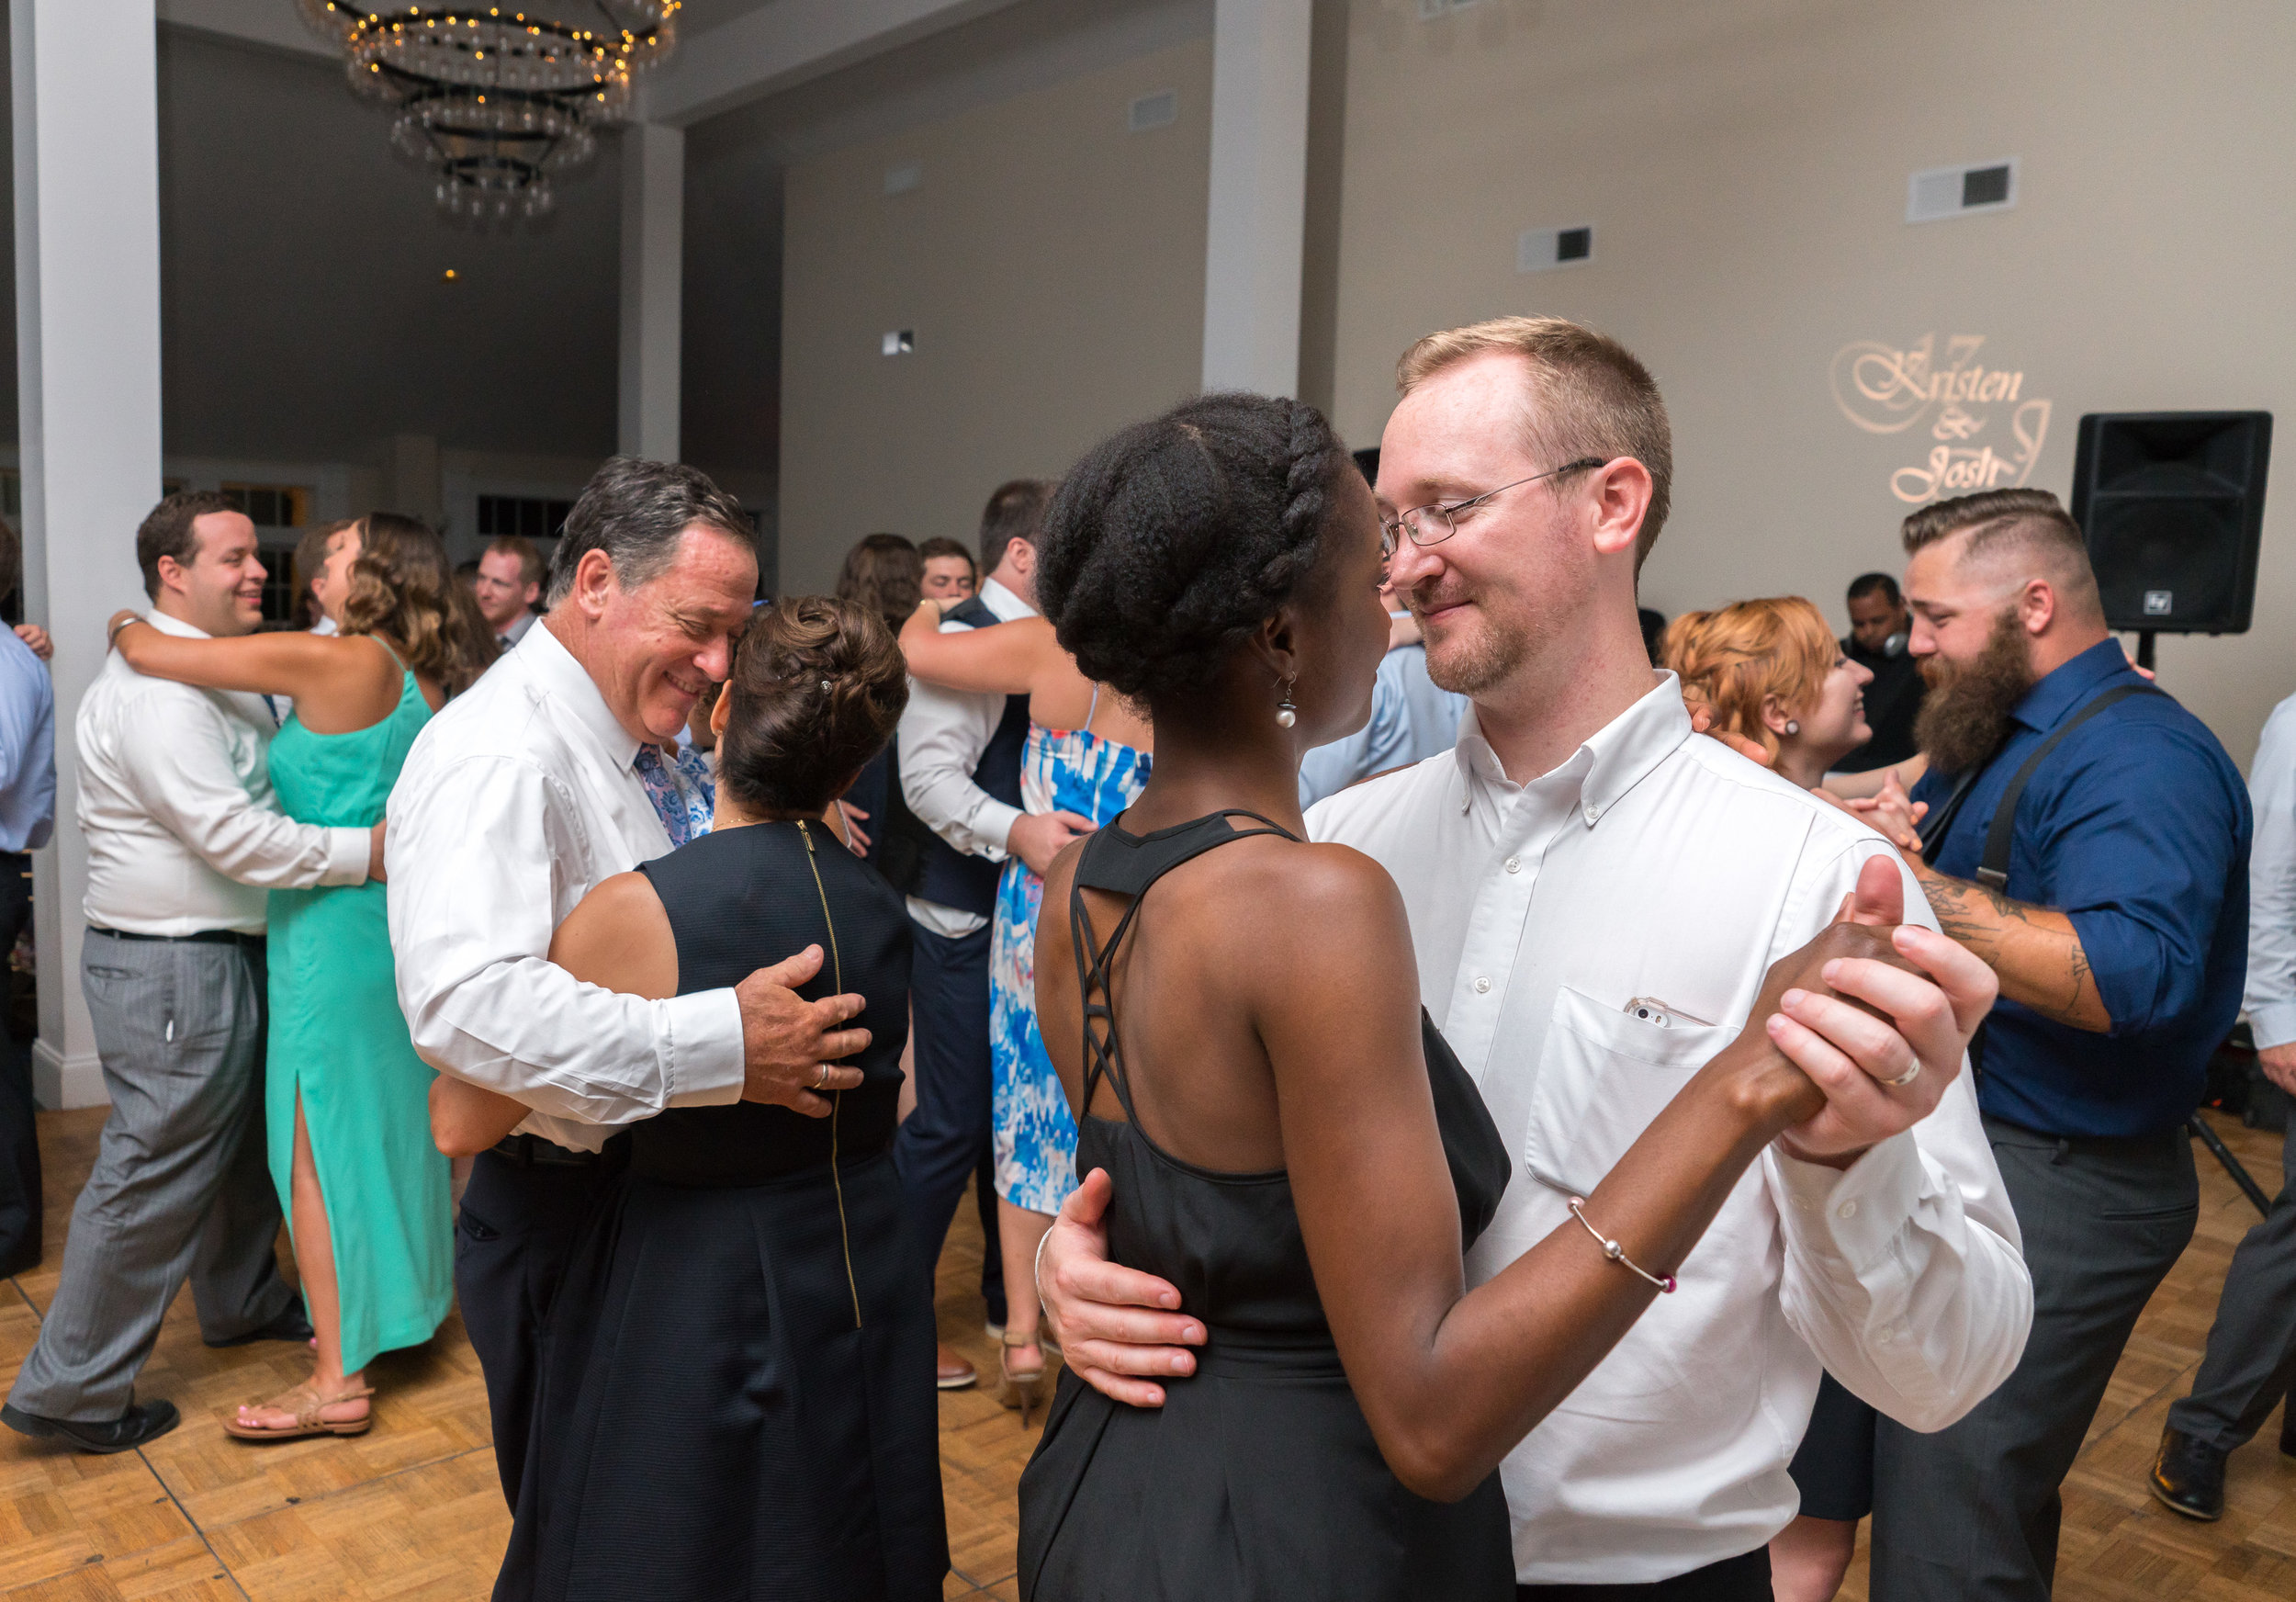 Slow dance during wedding reception at Springfield Manor Distillery